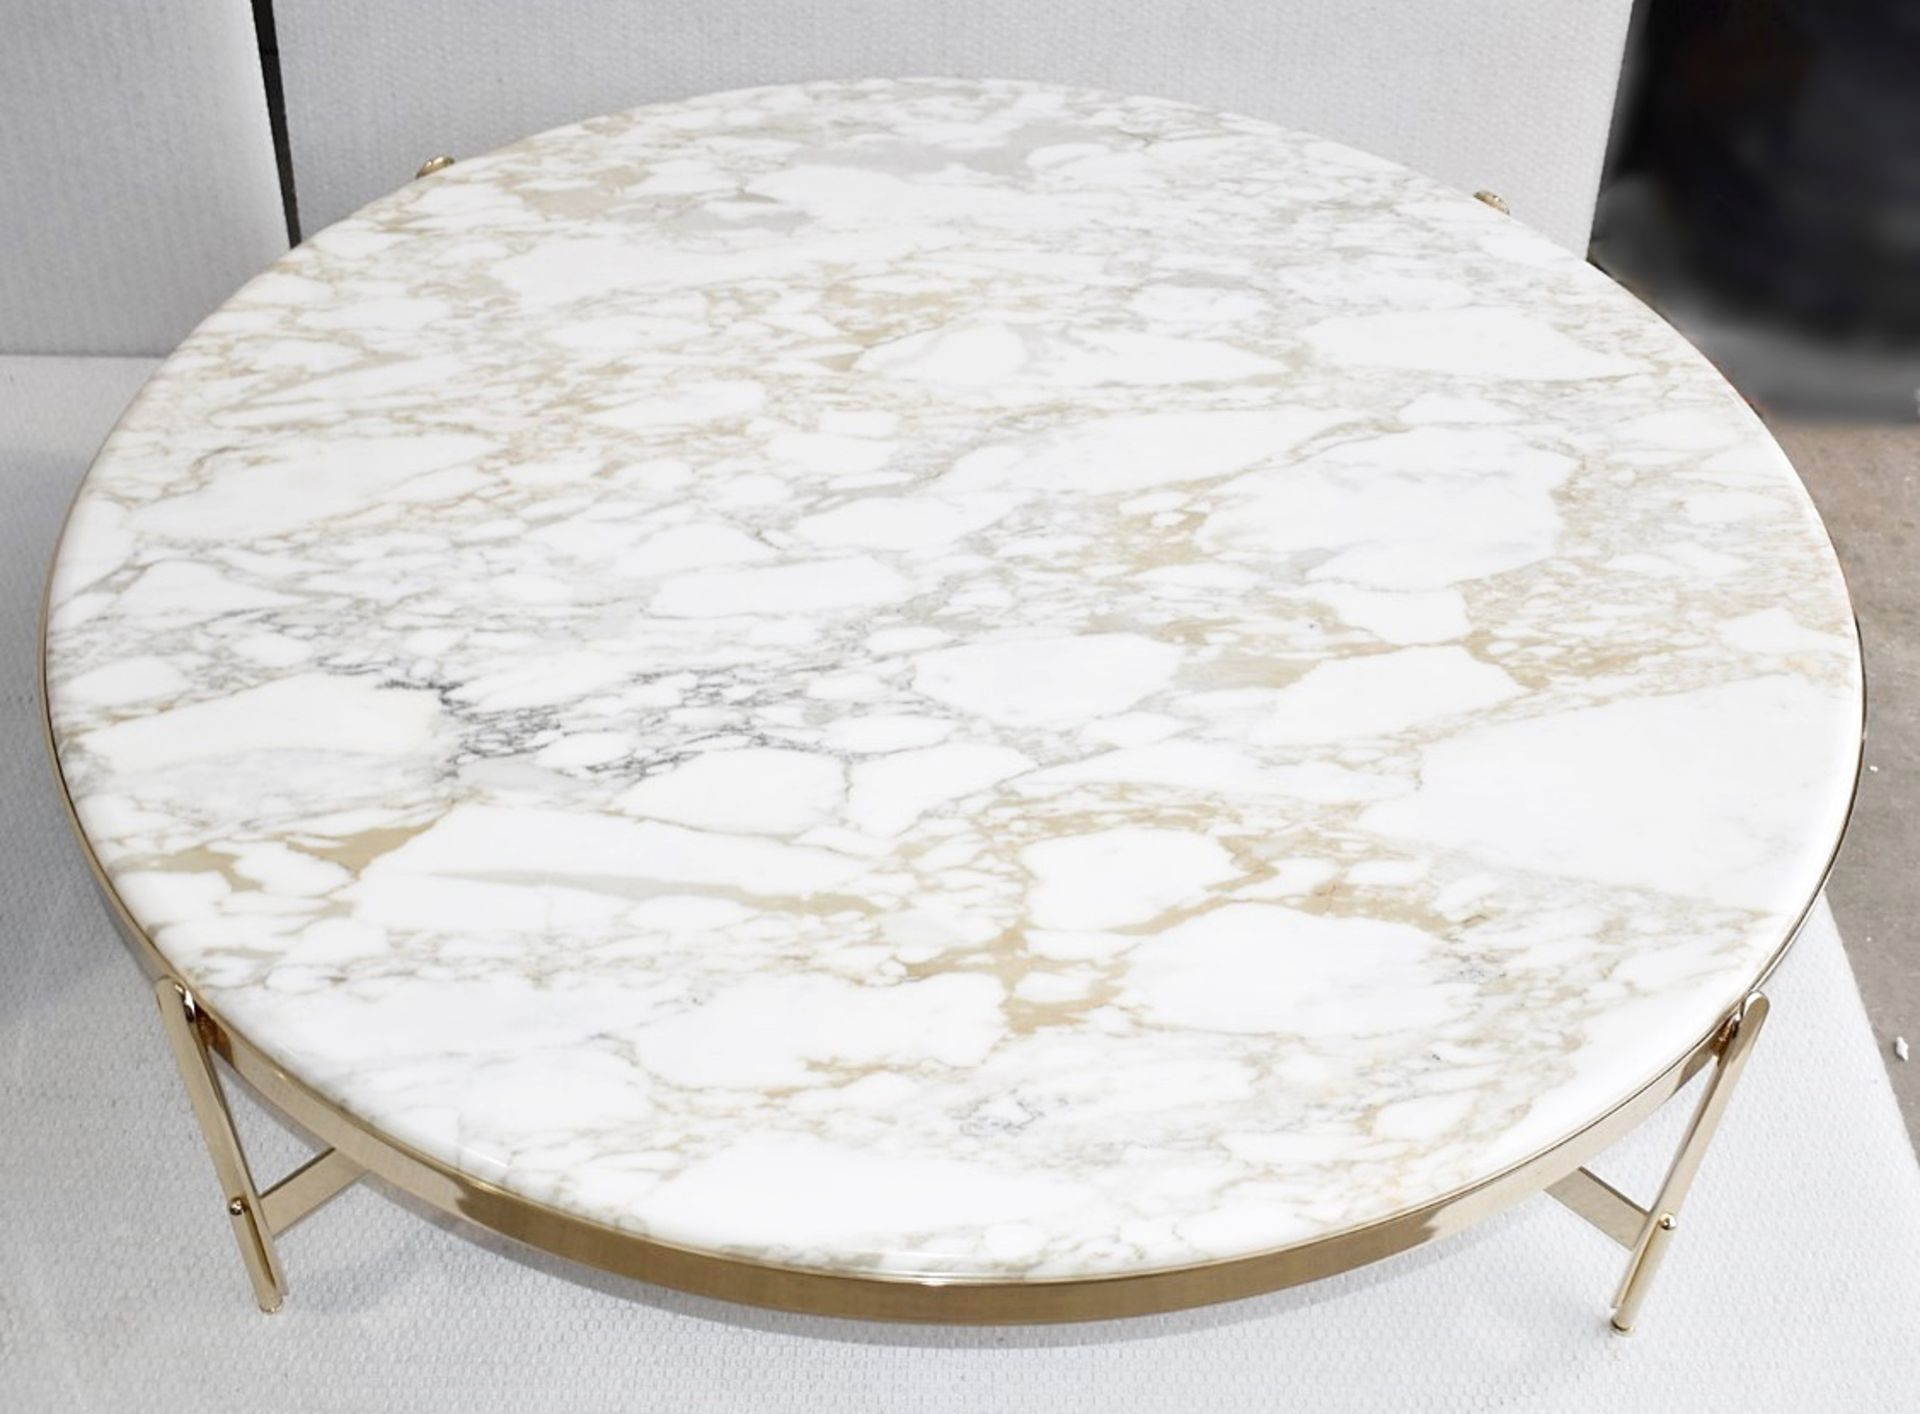 1 x ELIE SAAB MAISON 'Zenith' Luxury Italian Marble Topped Coffee Table - Original Price £6,480 - Image 2 of 6